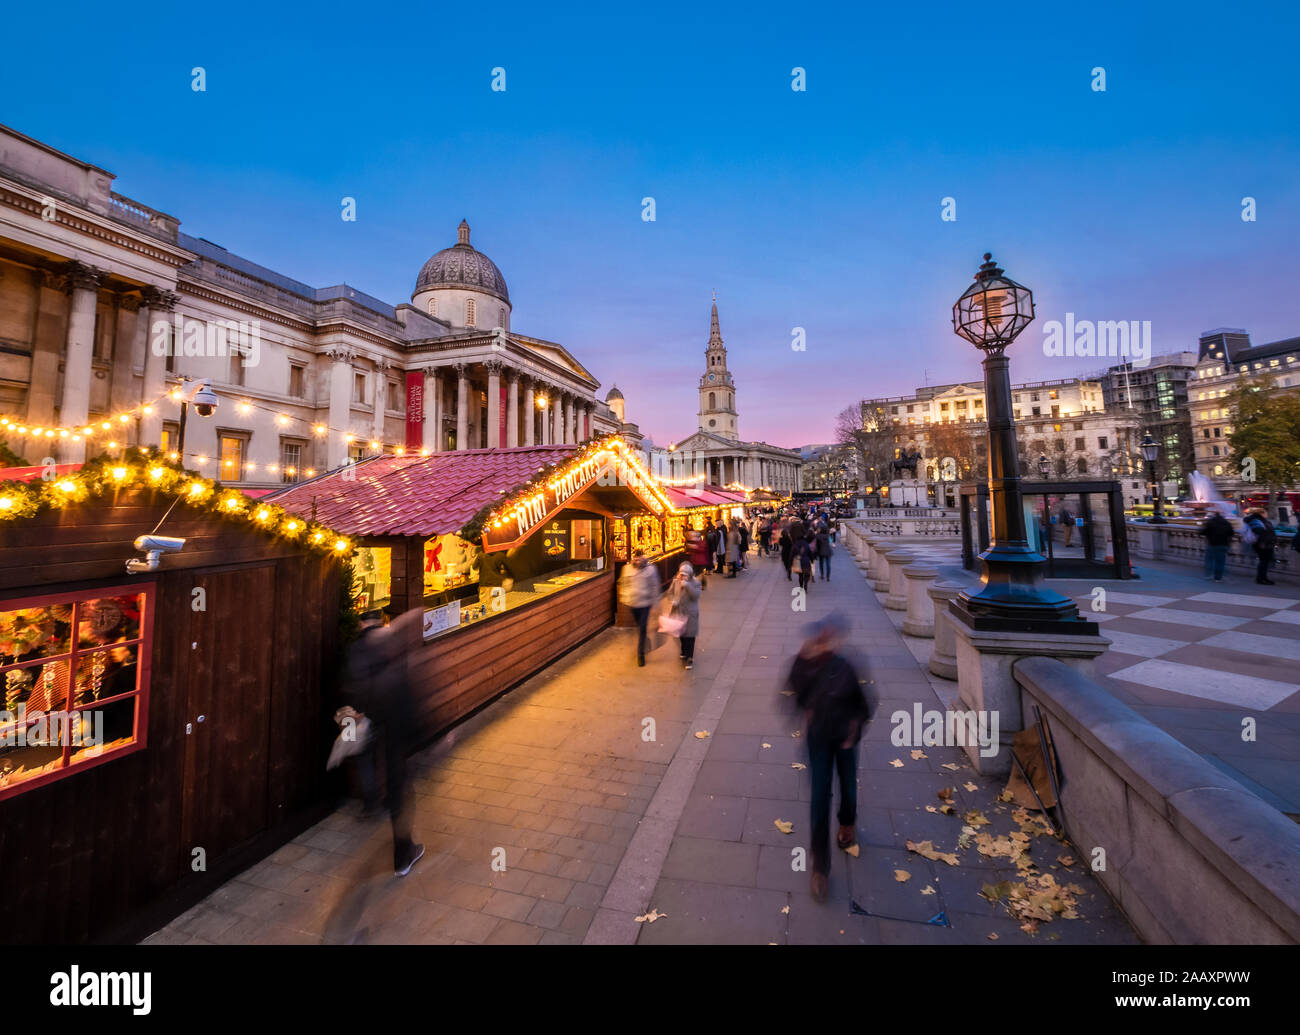 London, England, Uk - Christmas scene outdoors in Trafalgar square Market at blue hour in the winter season Stock Photo